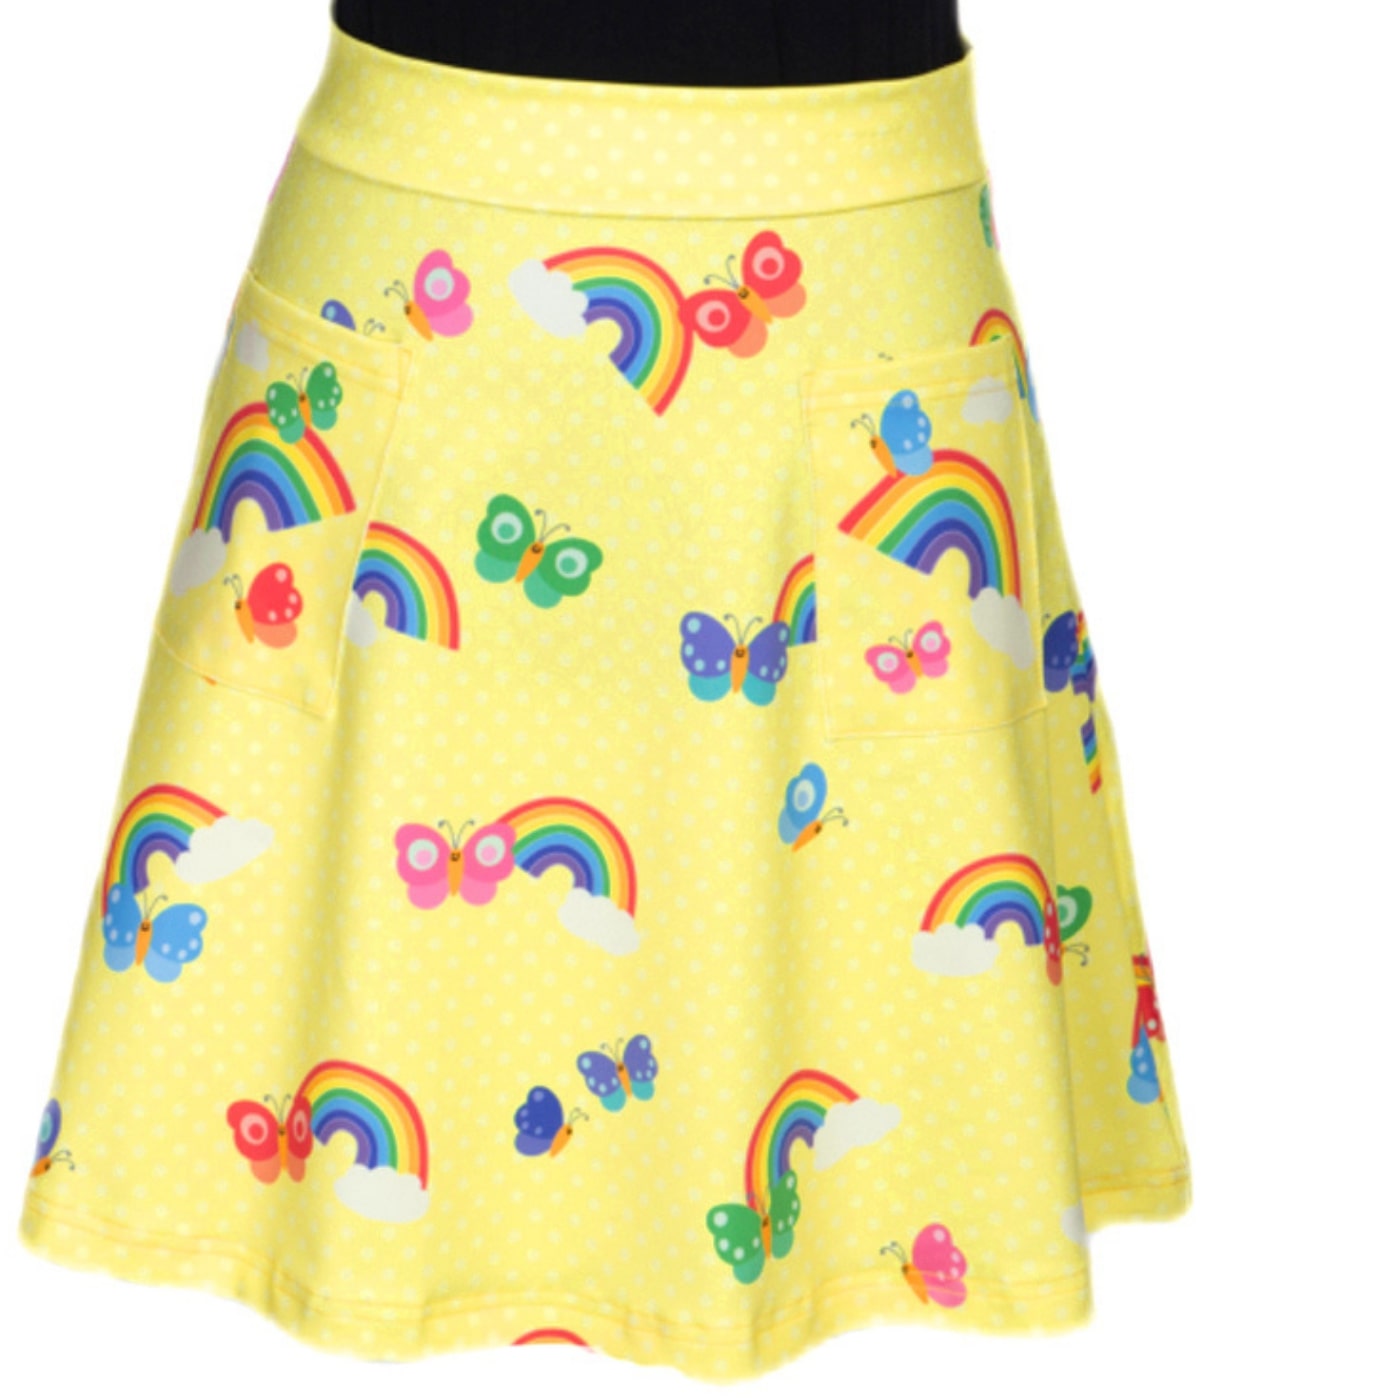 Sunshine Short Skirt by RainbowsAndFairies.com.au (Rainbows - Butterflies - Yellow Polka Dot - Kitsch - Aline Skirt With Pockets - Vintage Inspired) - SKU: CL_SHORT_SUNSH_ORG - Pic-02